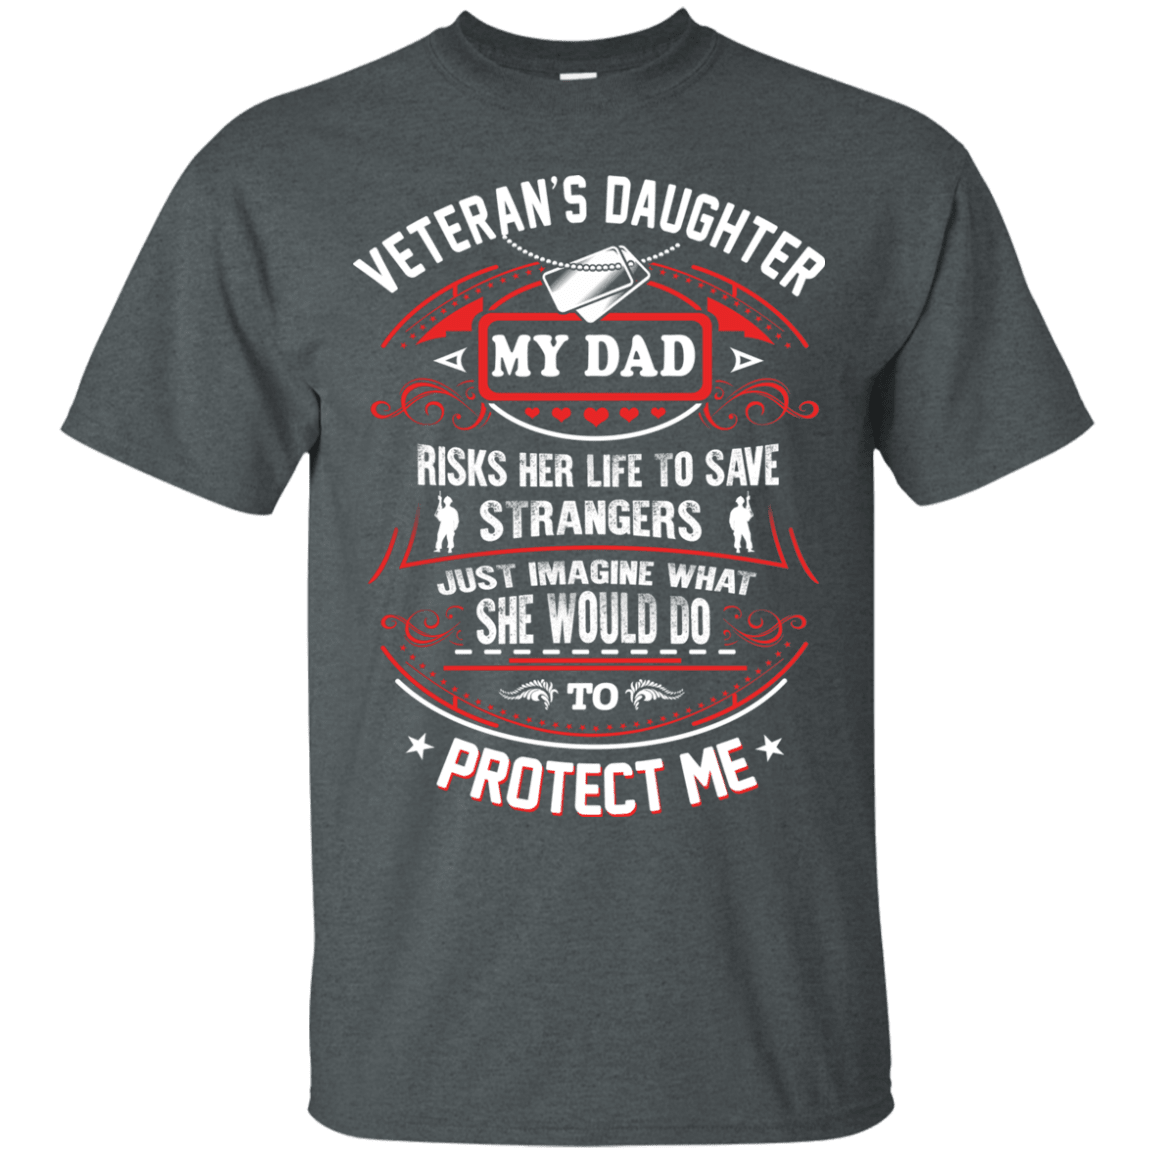 Military T-Shirt "VETERAN DAUGHTER MY DAD RISK HIS LIFE TO PROTECT ME"-TShirt-General-Veterans Nation